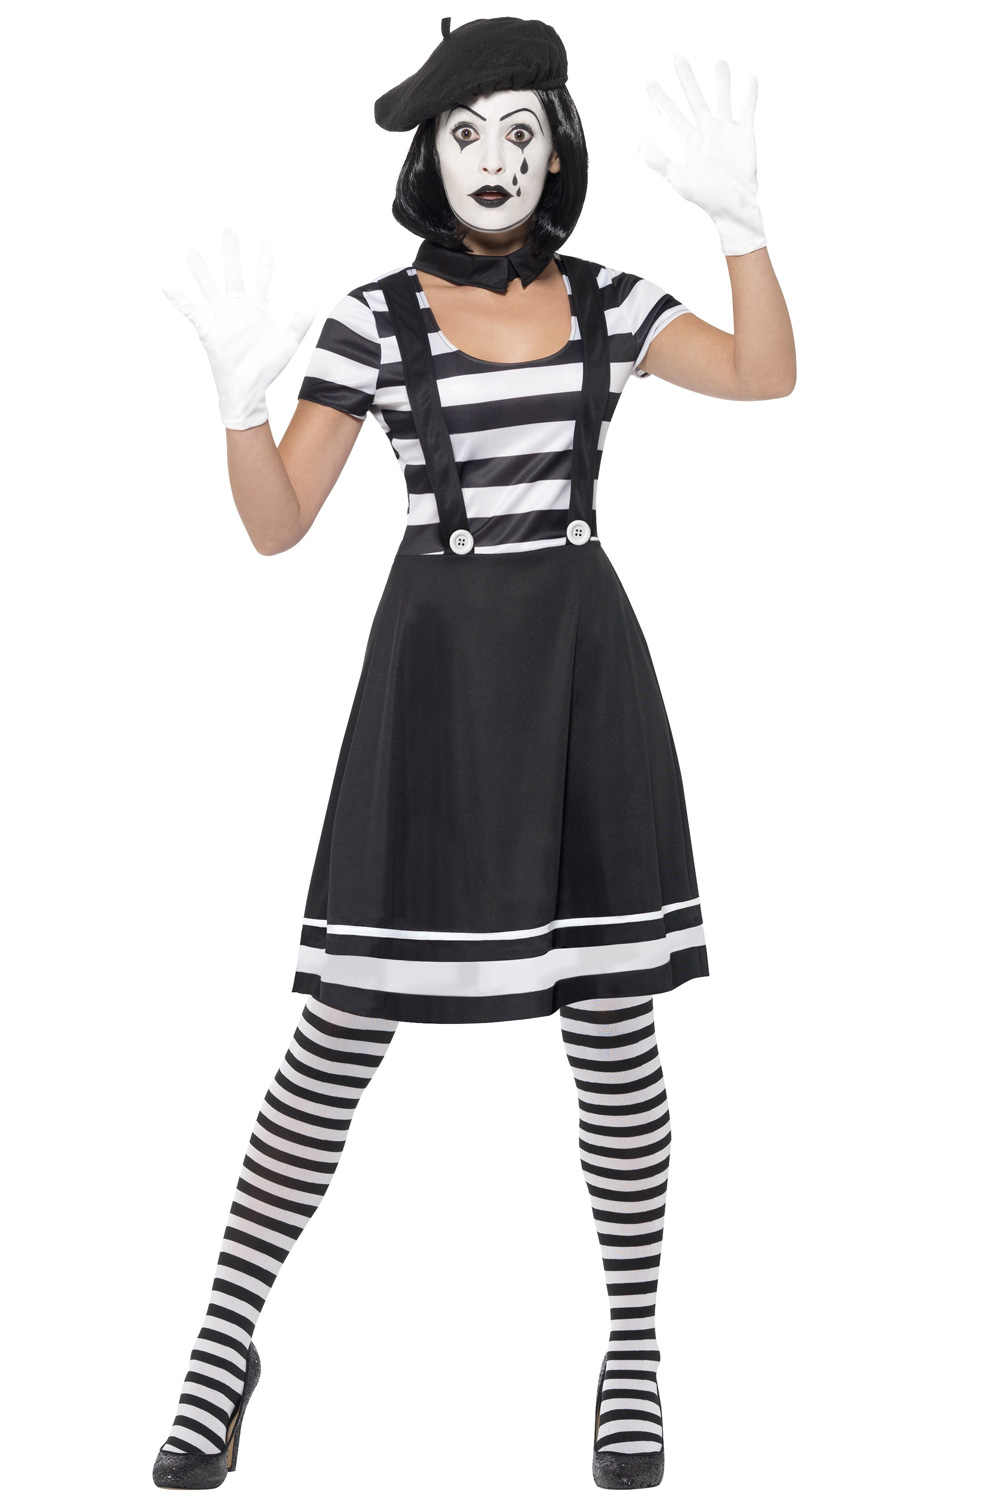 Lady Mime Artist Adult Costume.